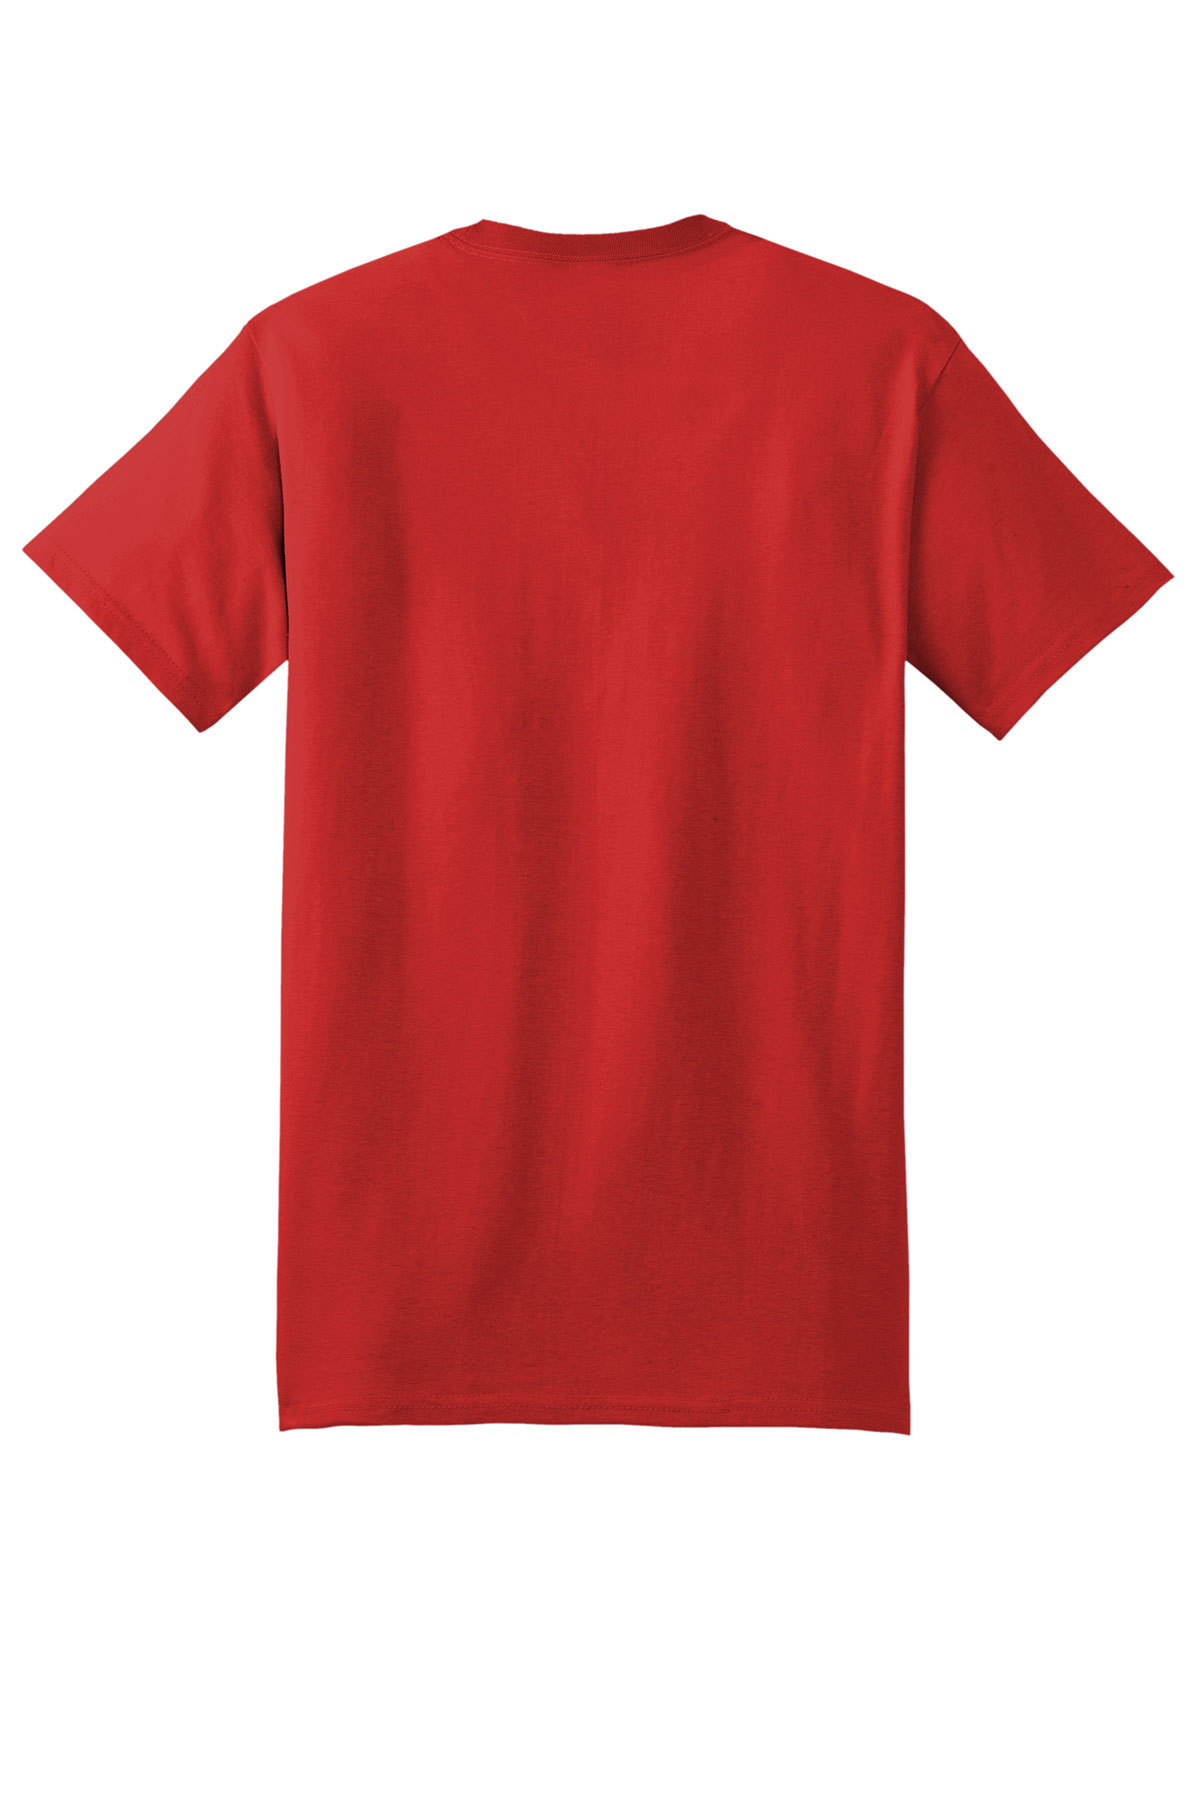 Hanes Beefy-T - 100% Cotton T-Shirt | Product | SanMar